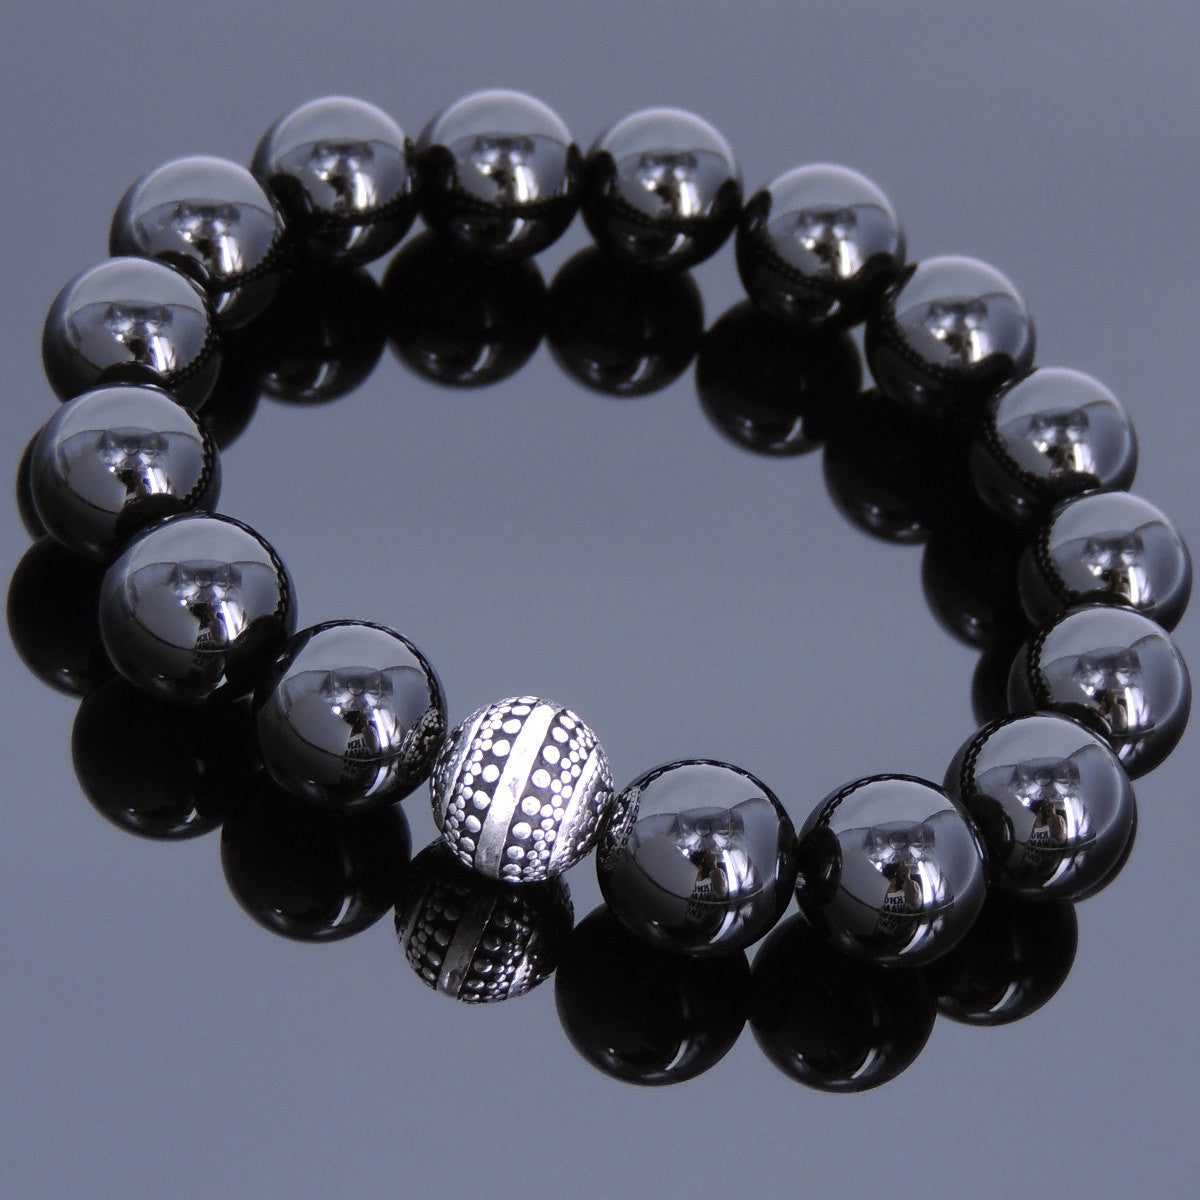 12mm Bright Black Onyx Healing Gemstone Bracelet with S925 Sterling Silver Energy Bead - Handmade by Gem & Silver BR703